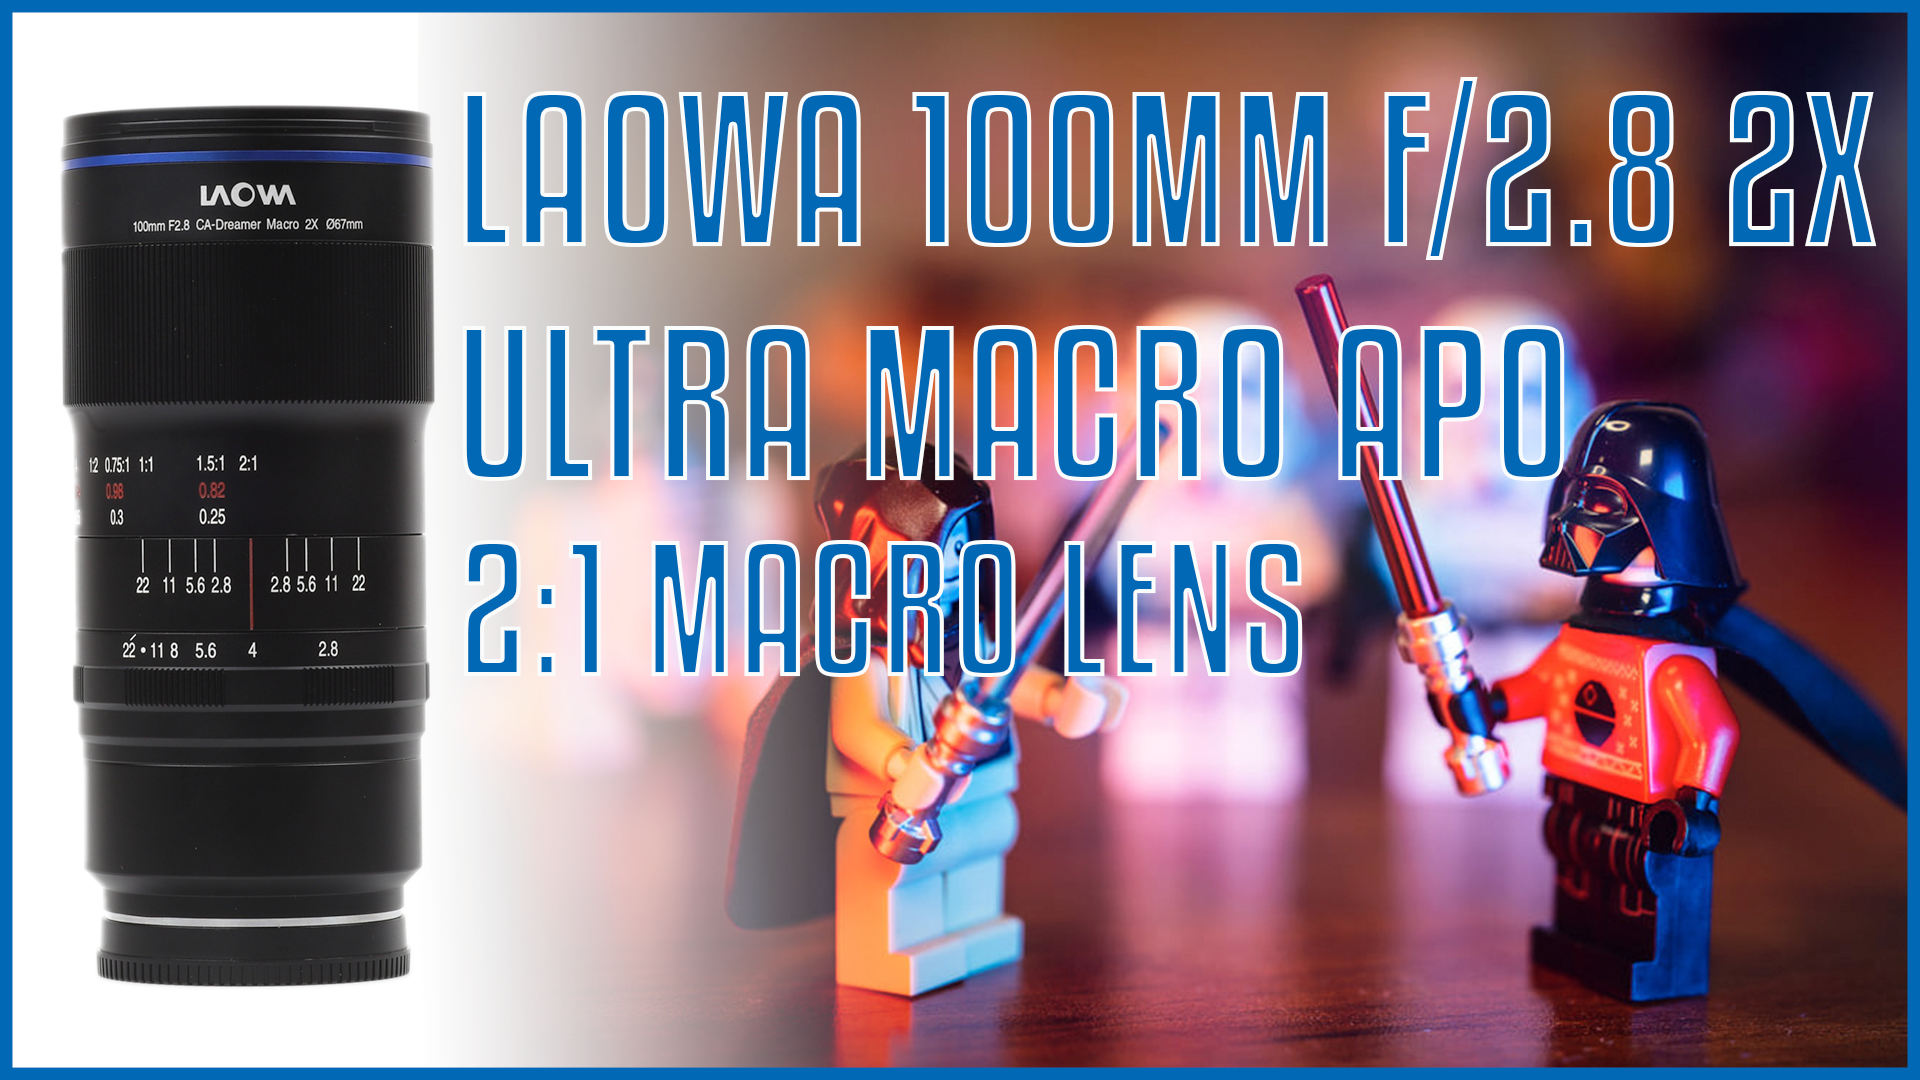 Laowa 100mm f/2.8 2x Ultra Macro APO Review